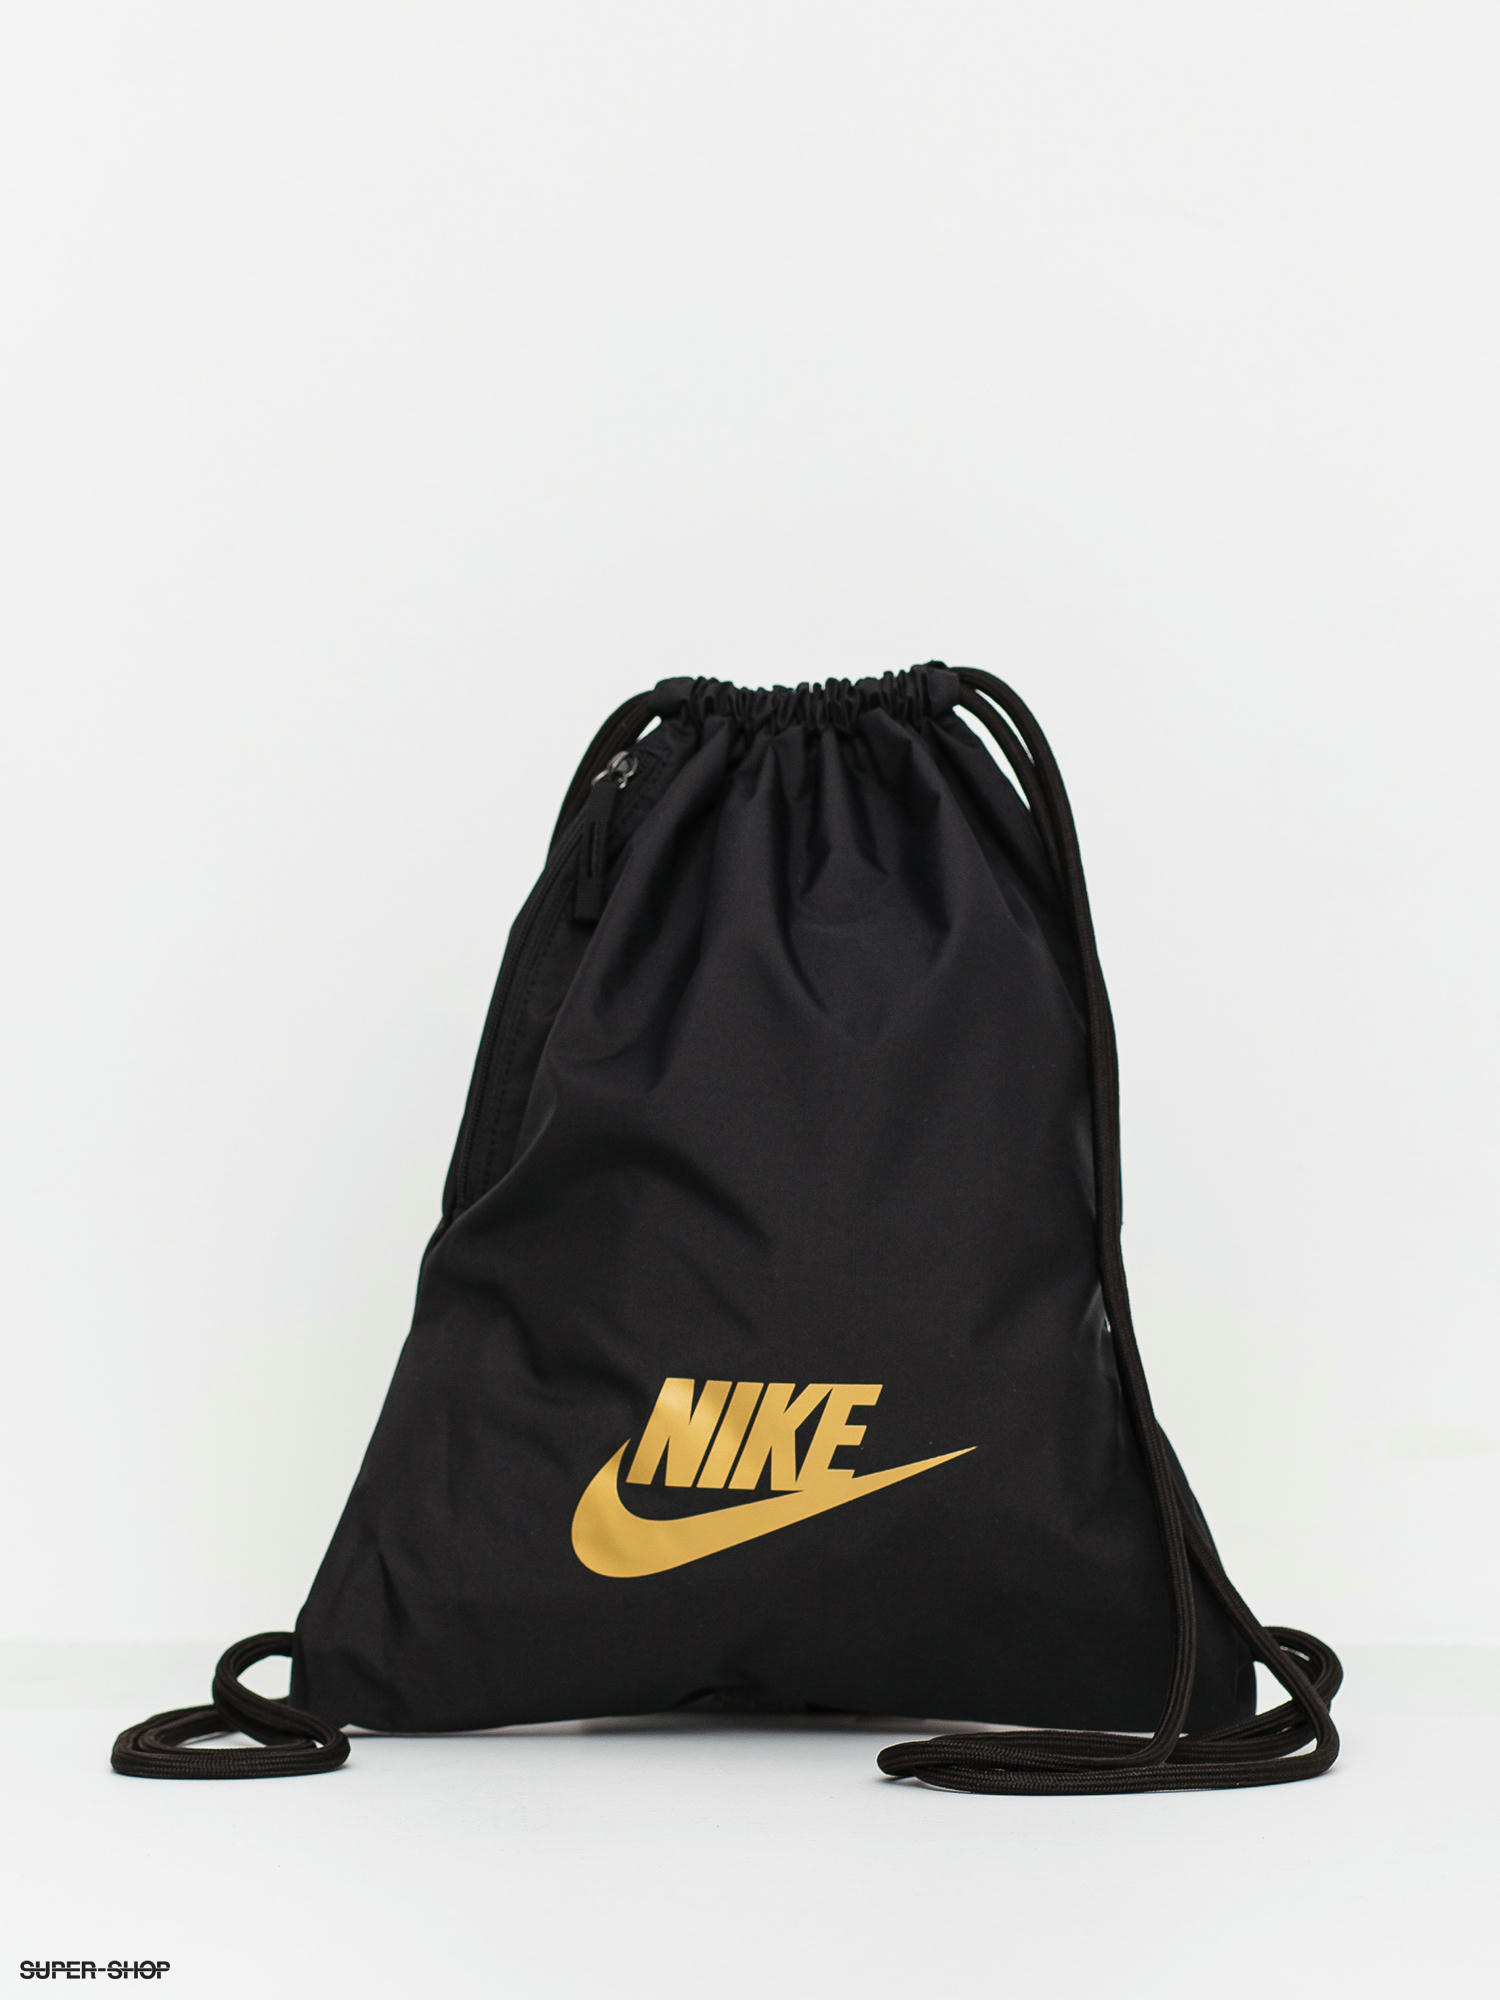 nike black and gold bag